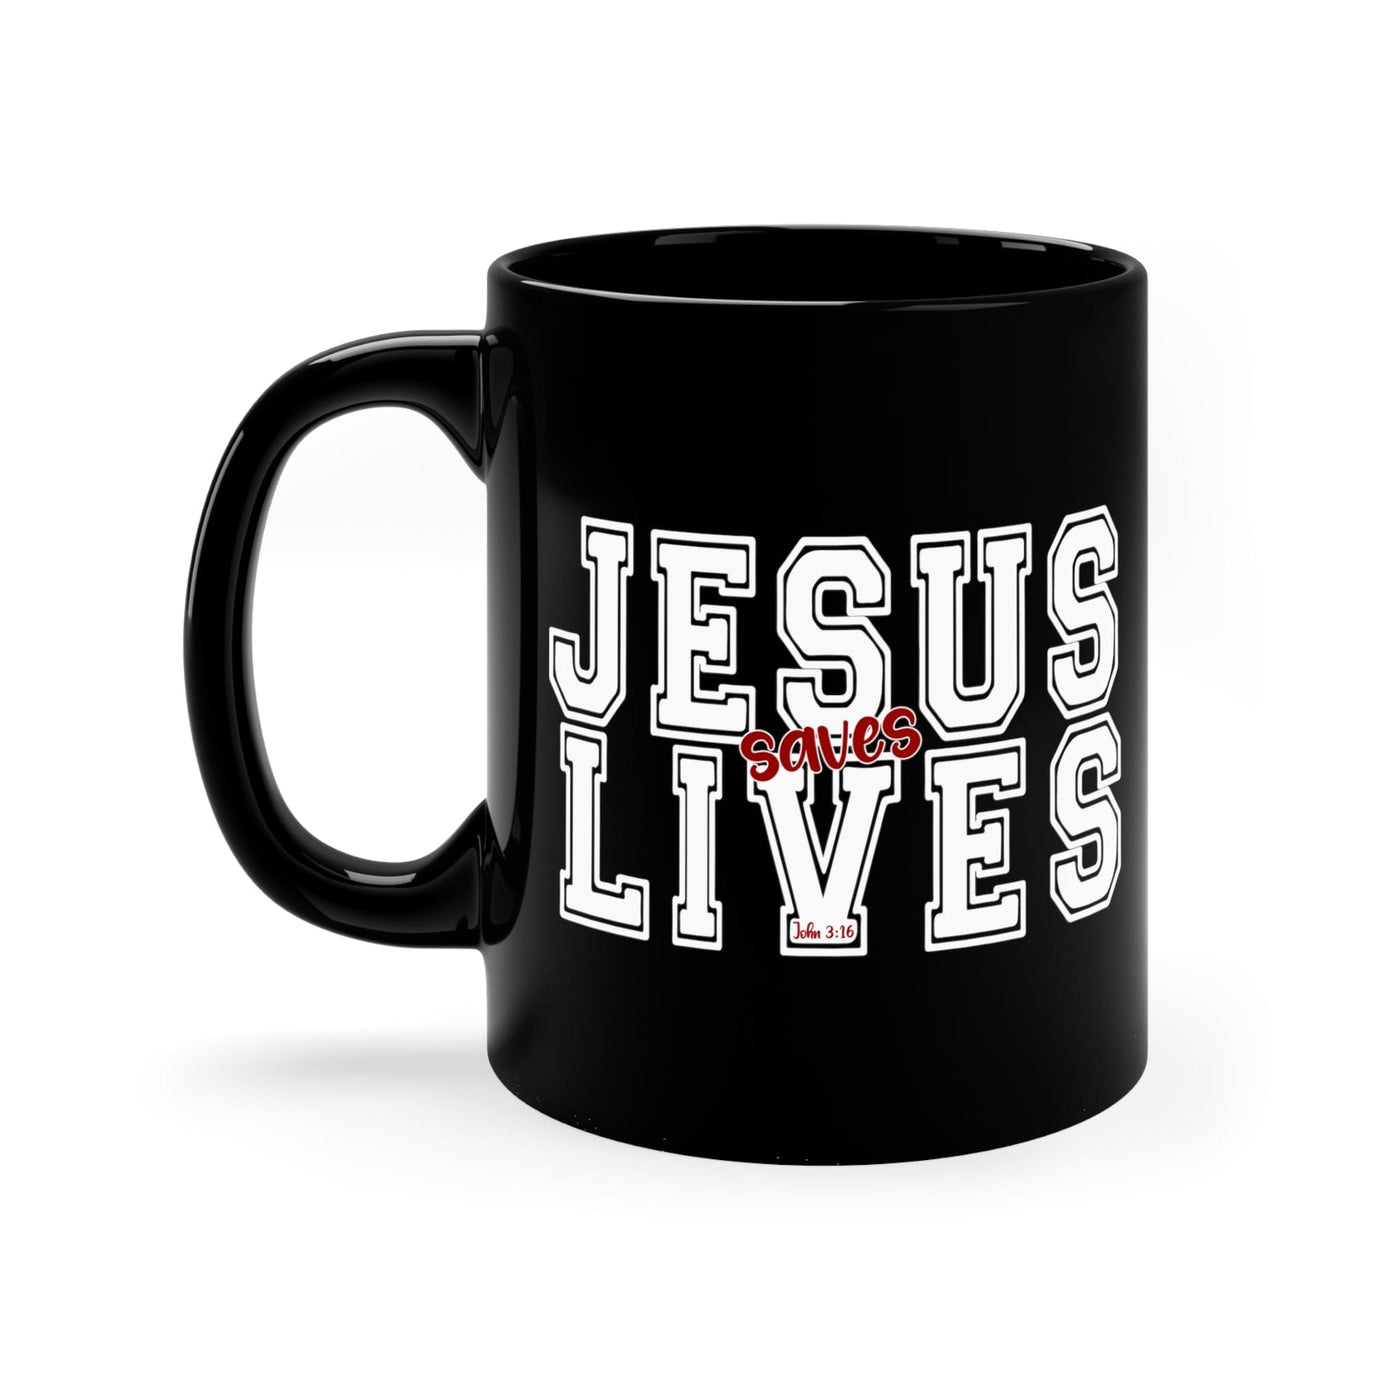 Black Ceramic Mug - 11oz Jesus Saves Lives White Red Illustration Decorative